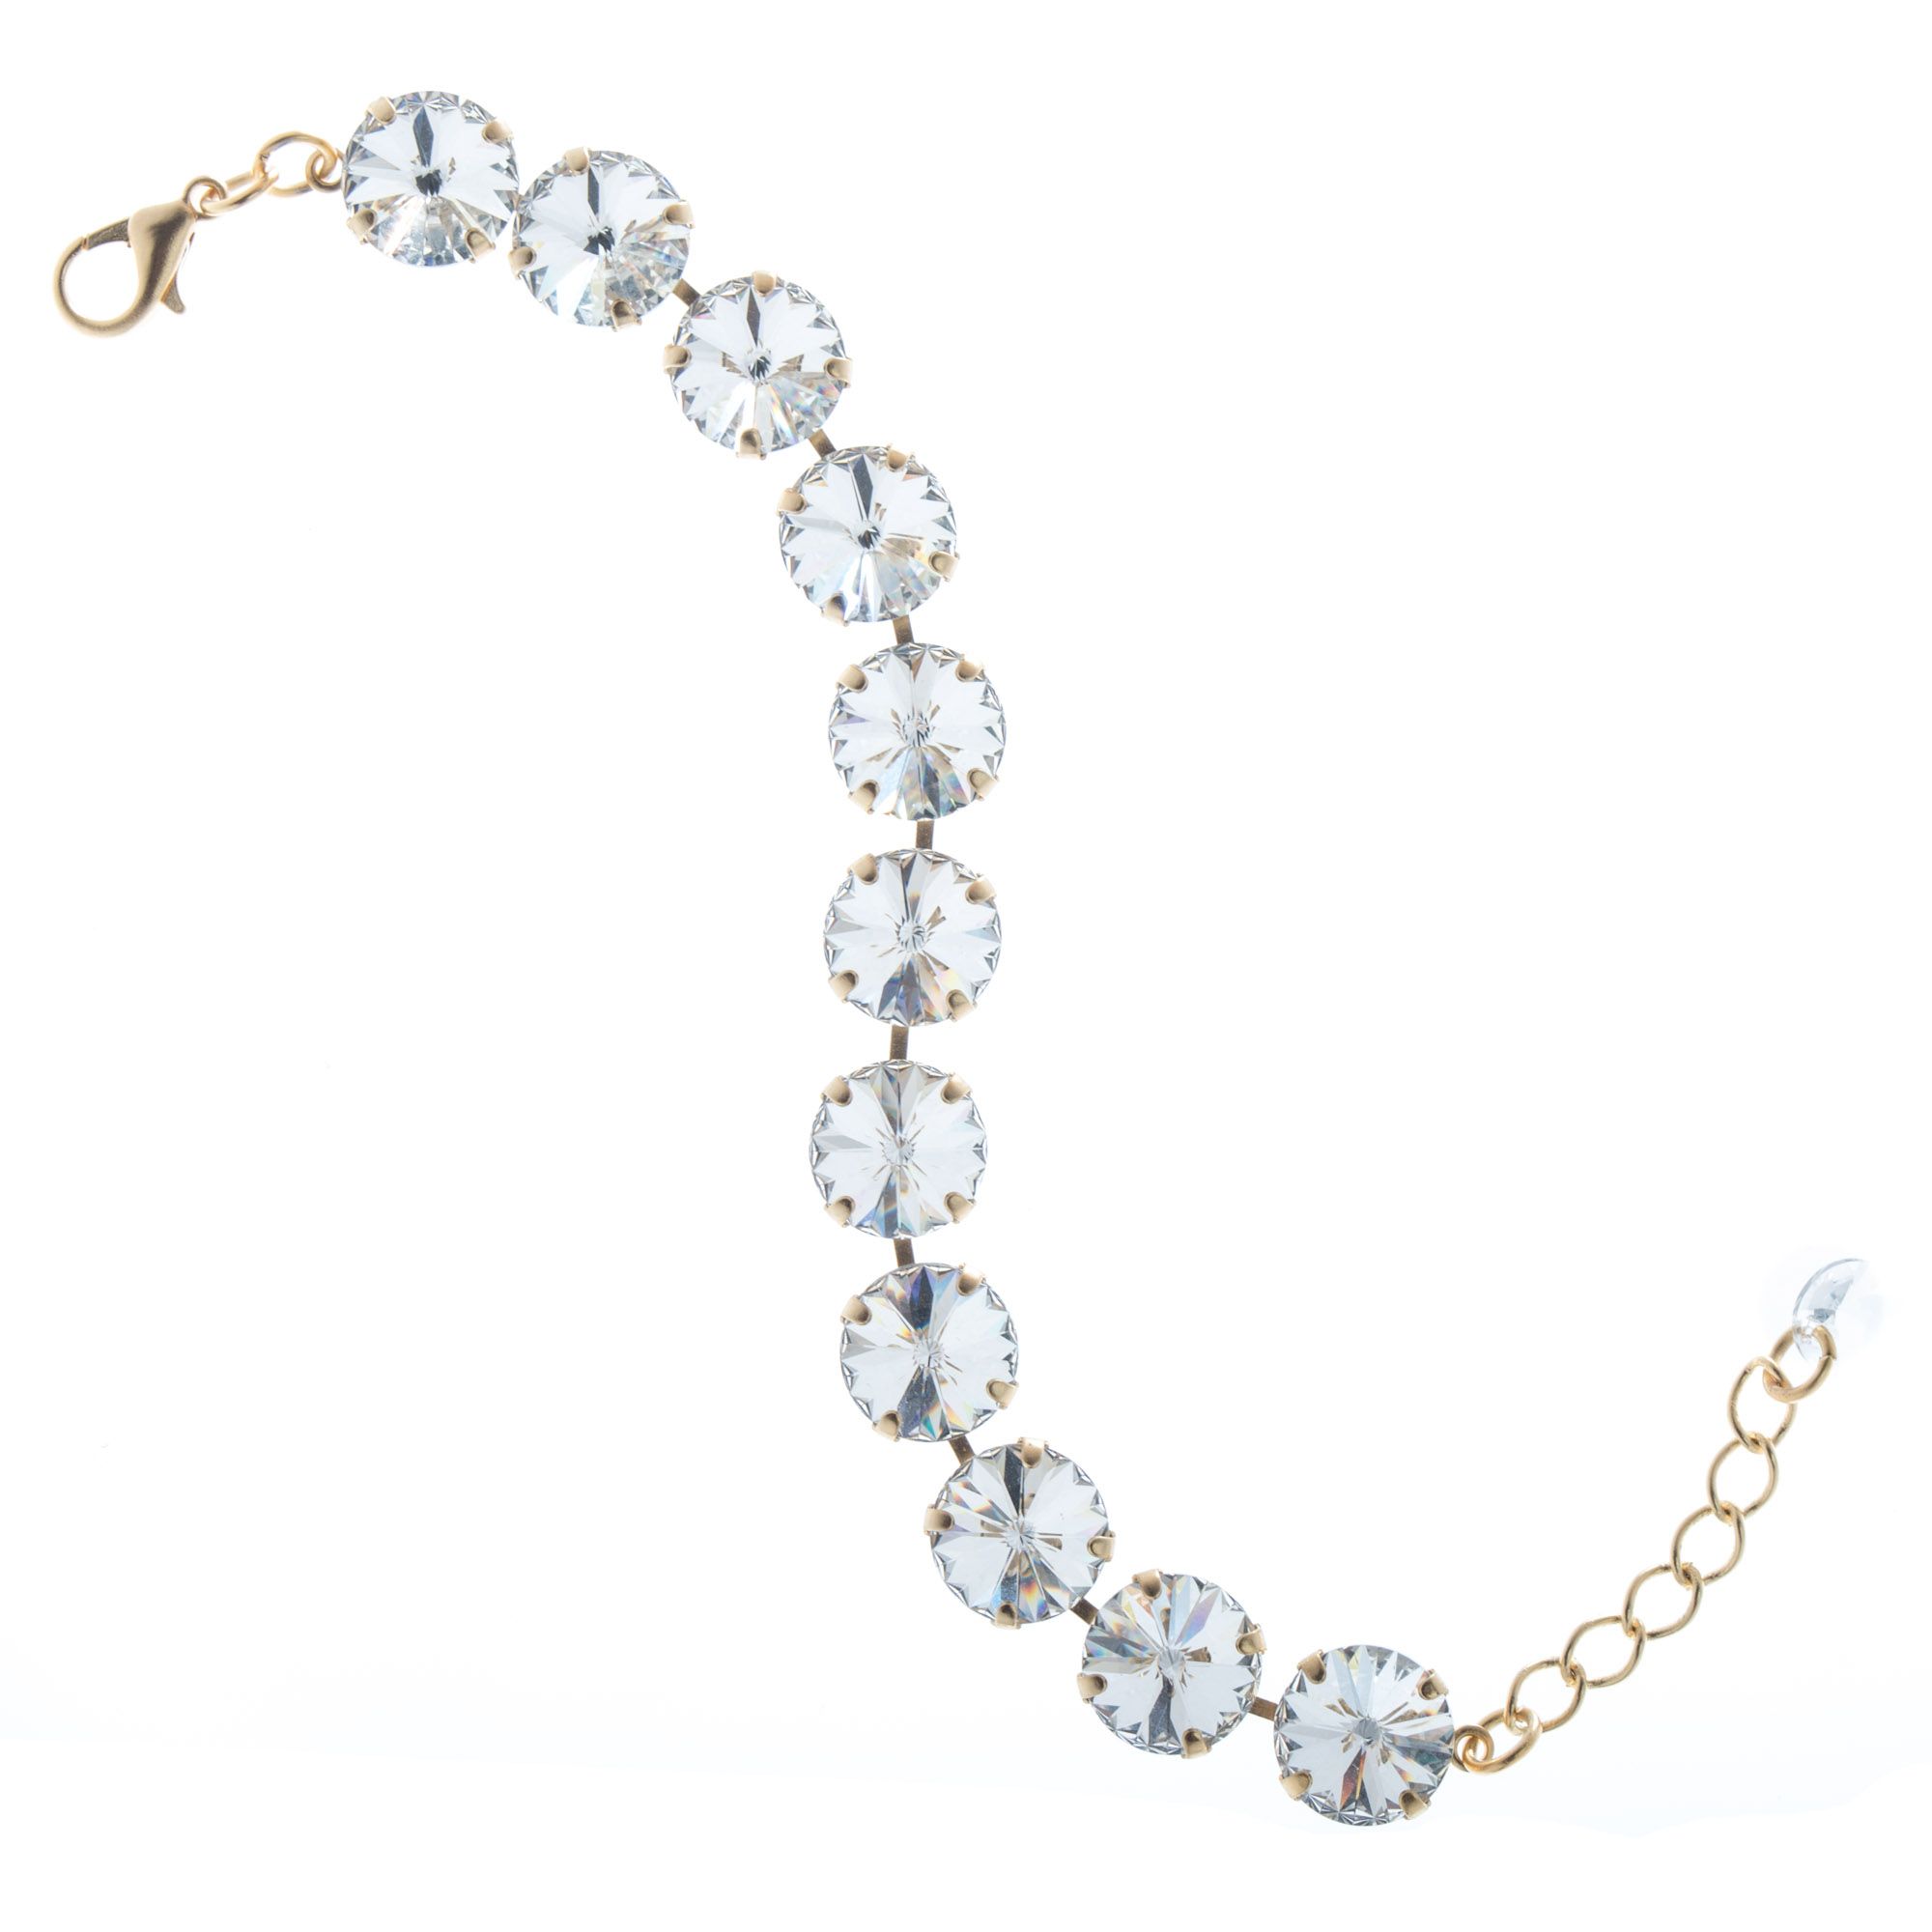 Lisa Marie Jewelry 12mm Square Swarovski Crystal Bracelet - Clear